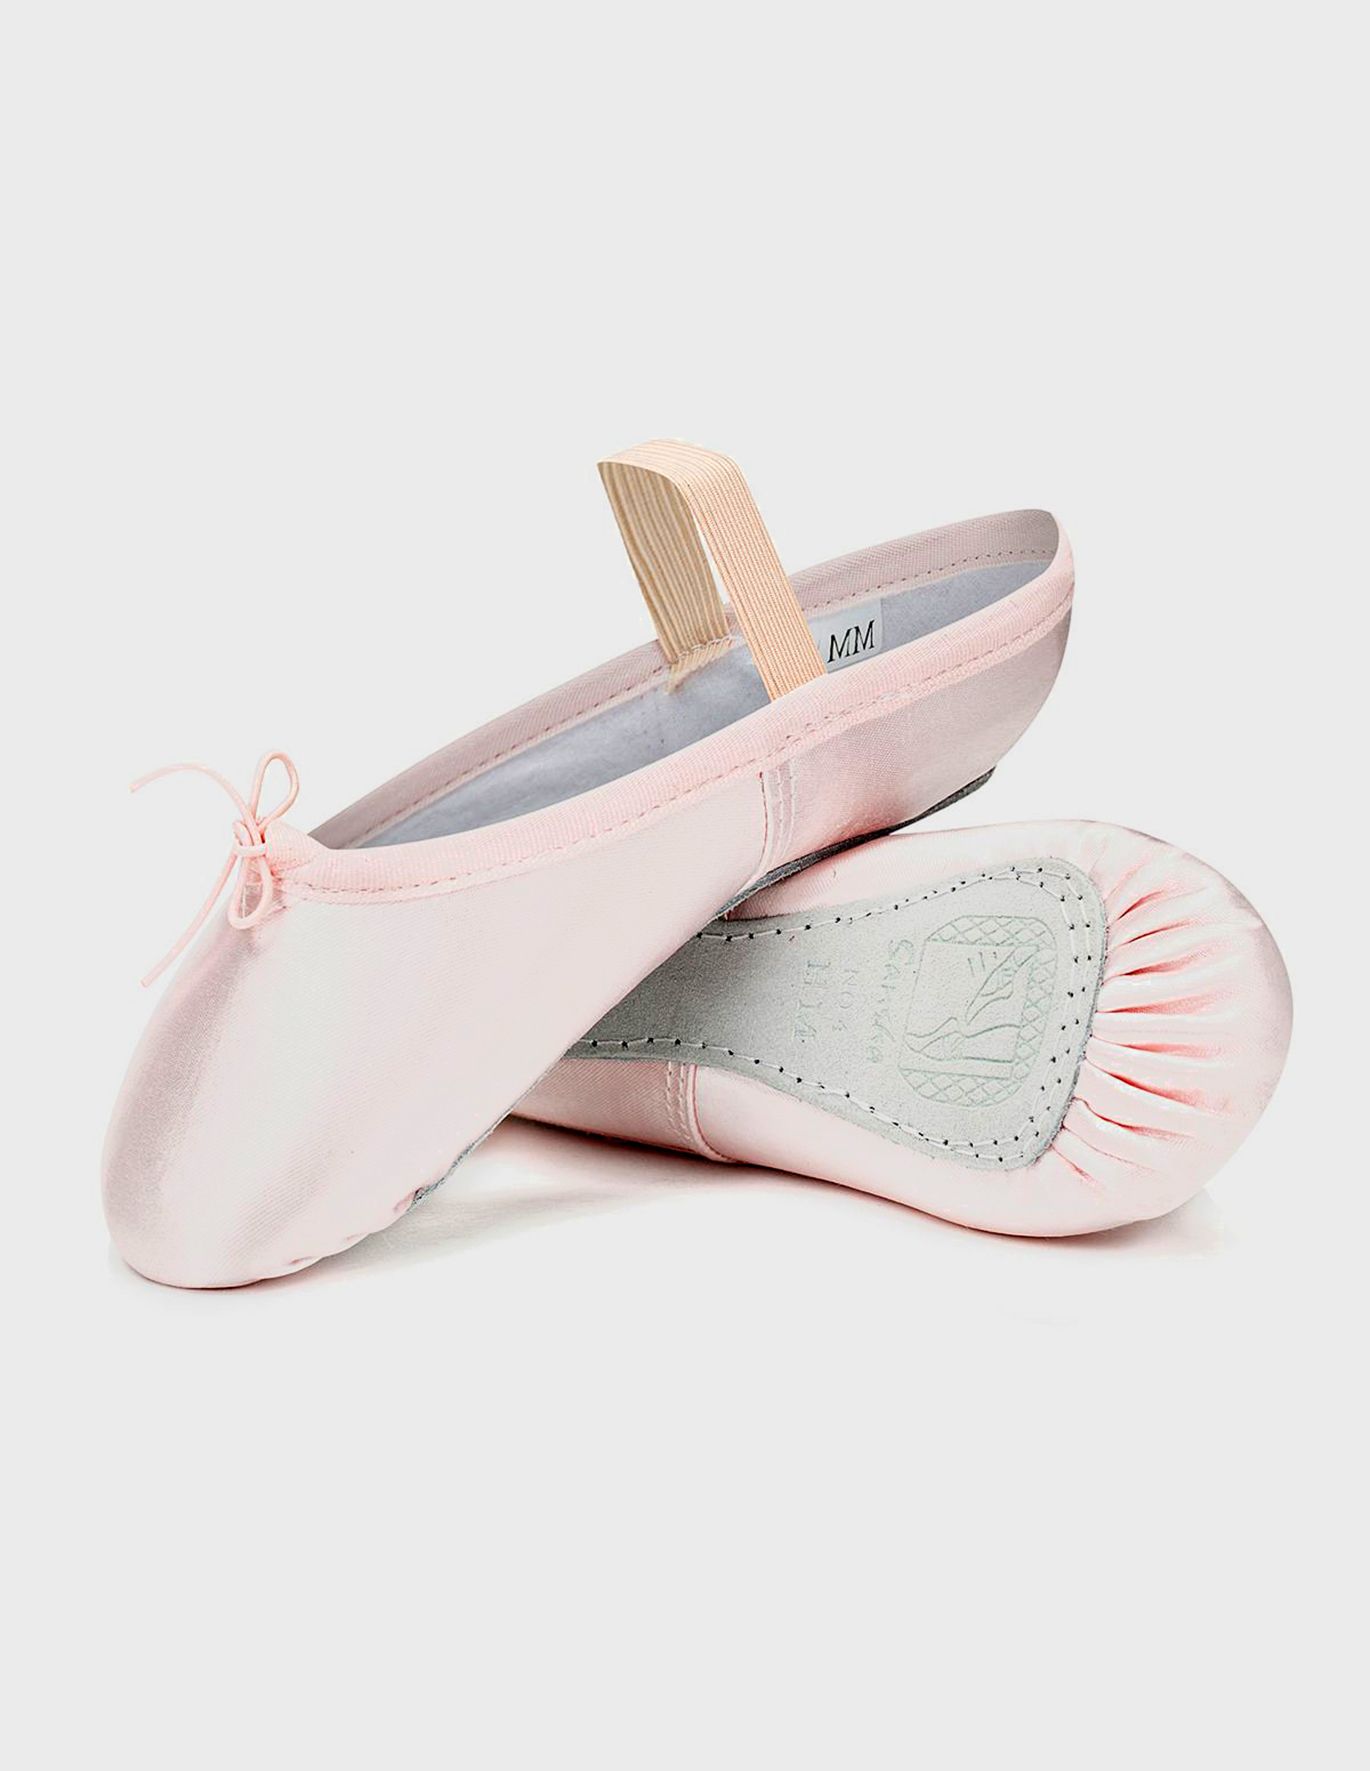 Sansha Satin Full Sole Ballet Shoe Model 4S with Elastics